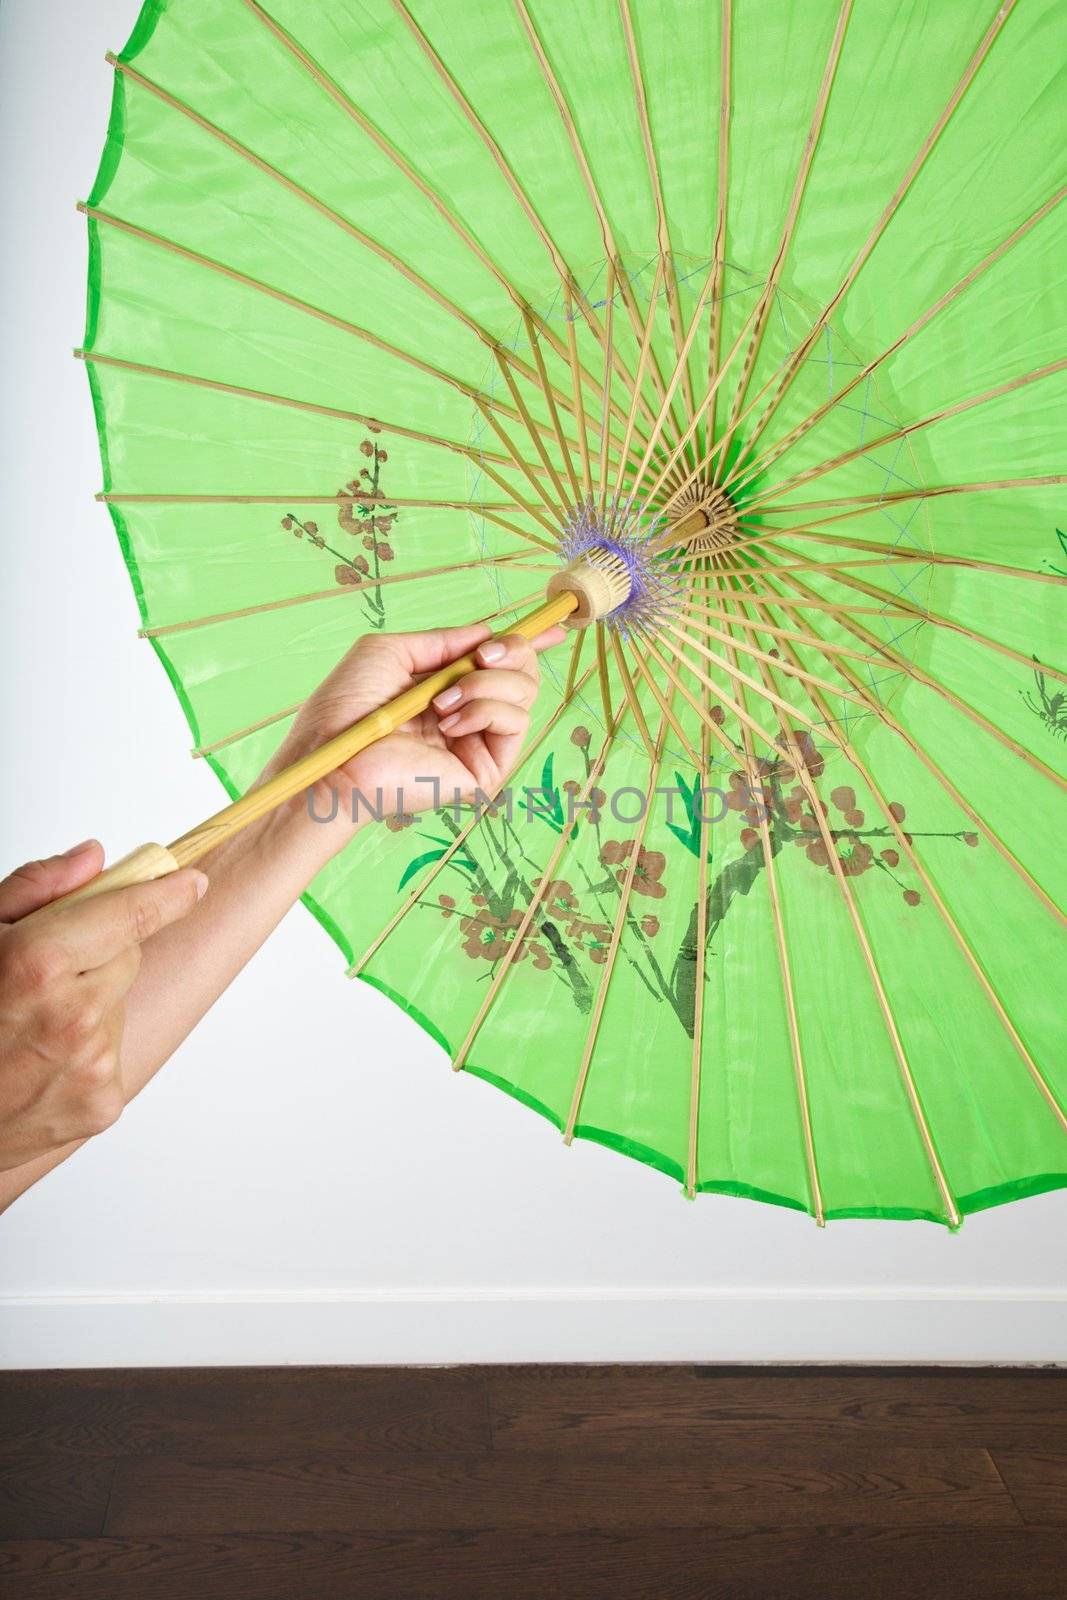 woman with asian umbrella on wood floor indoor